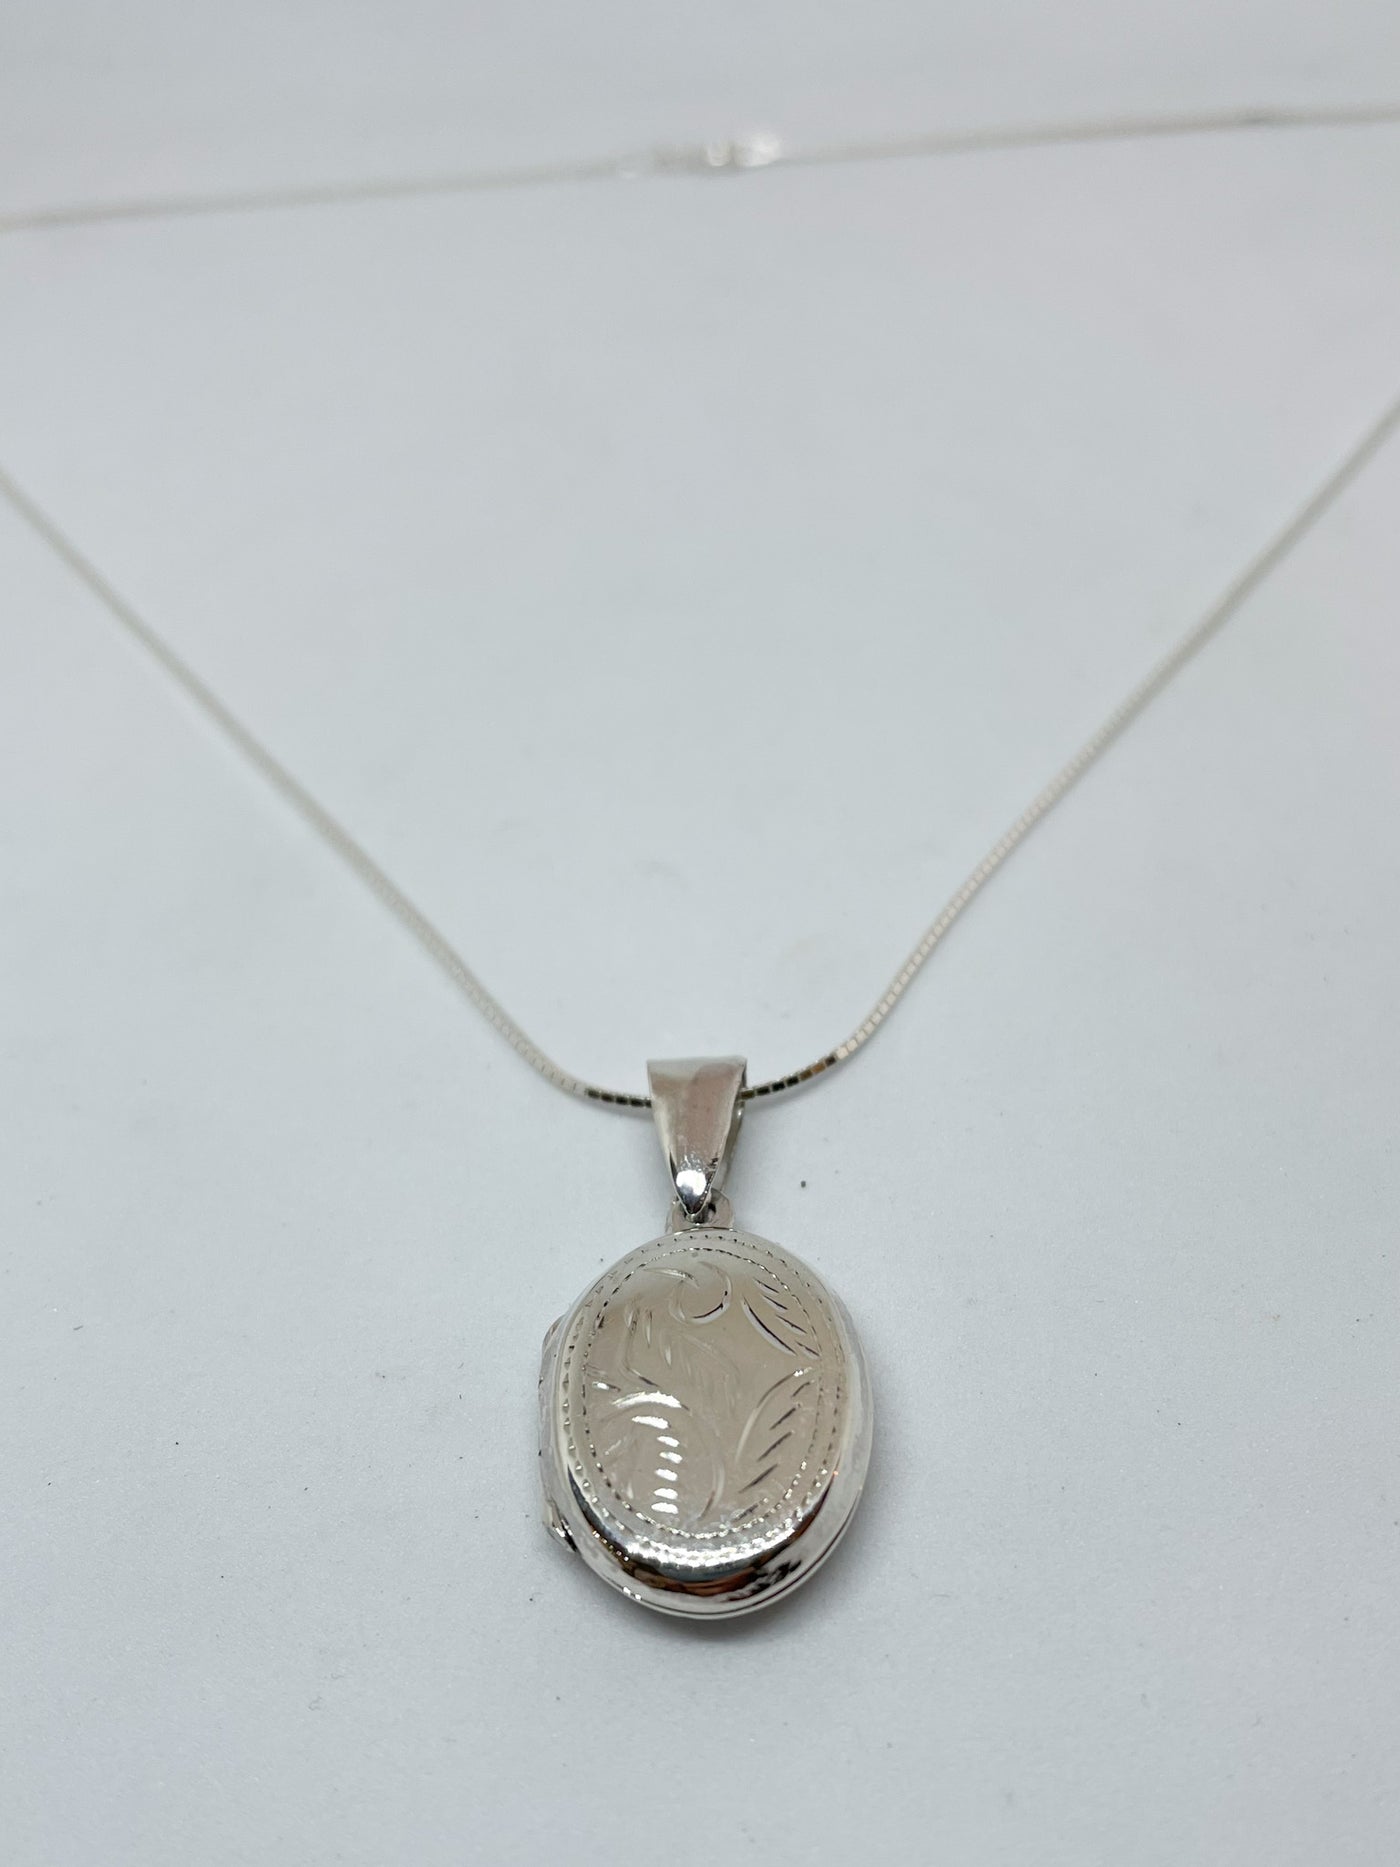 Oval Engraved Locket Necklace